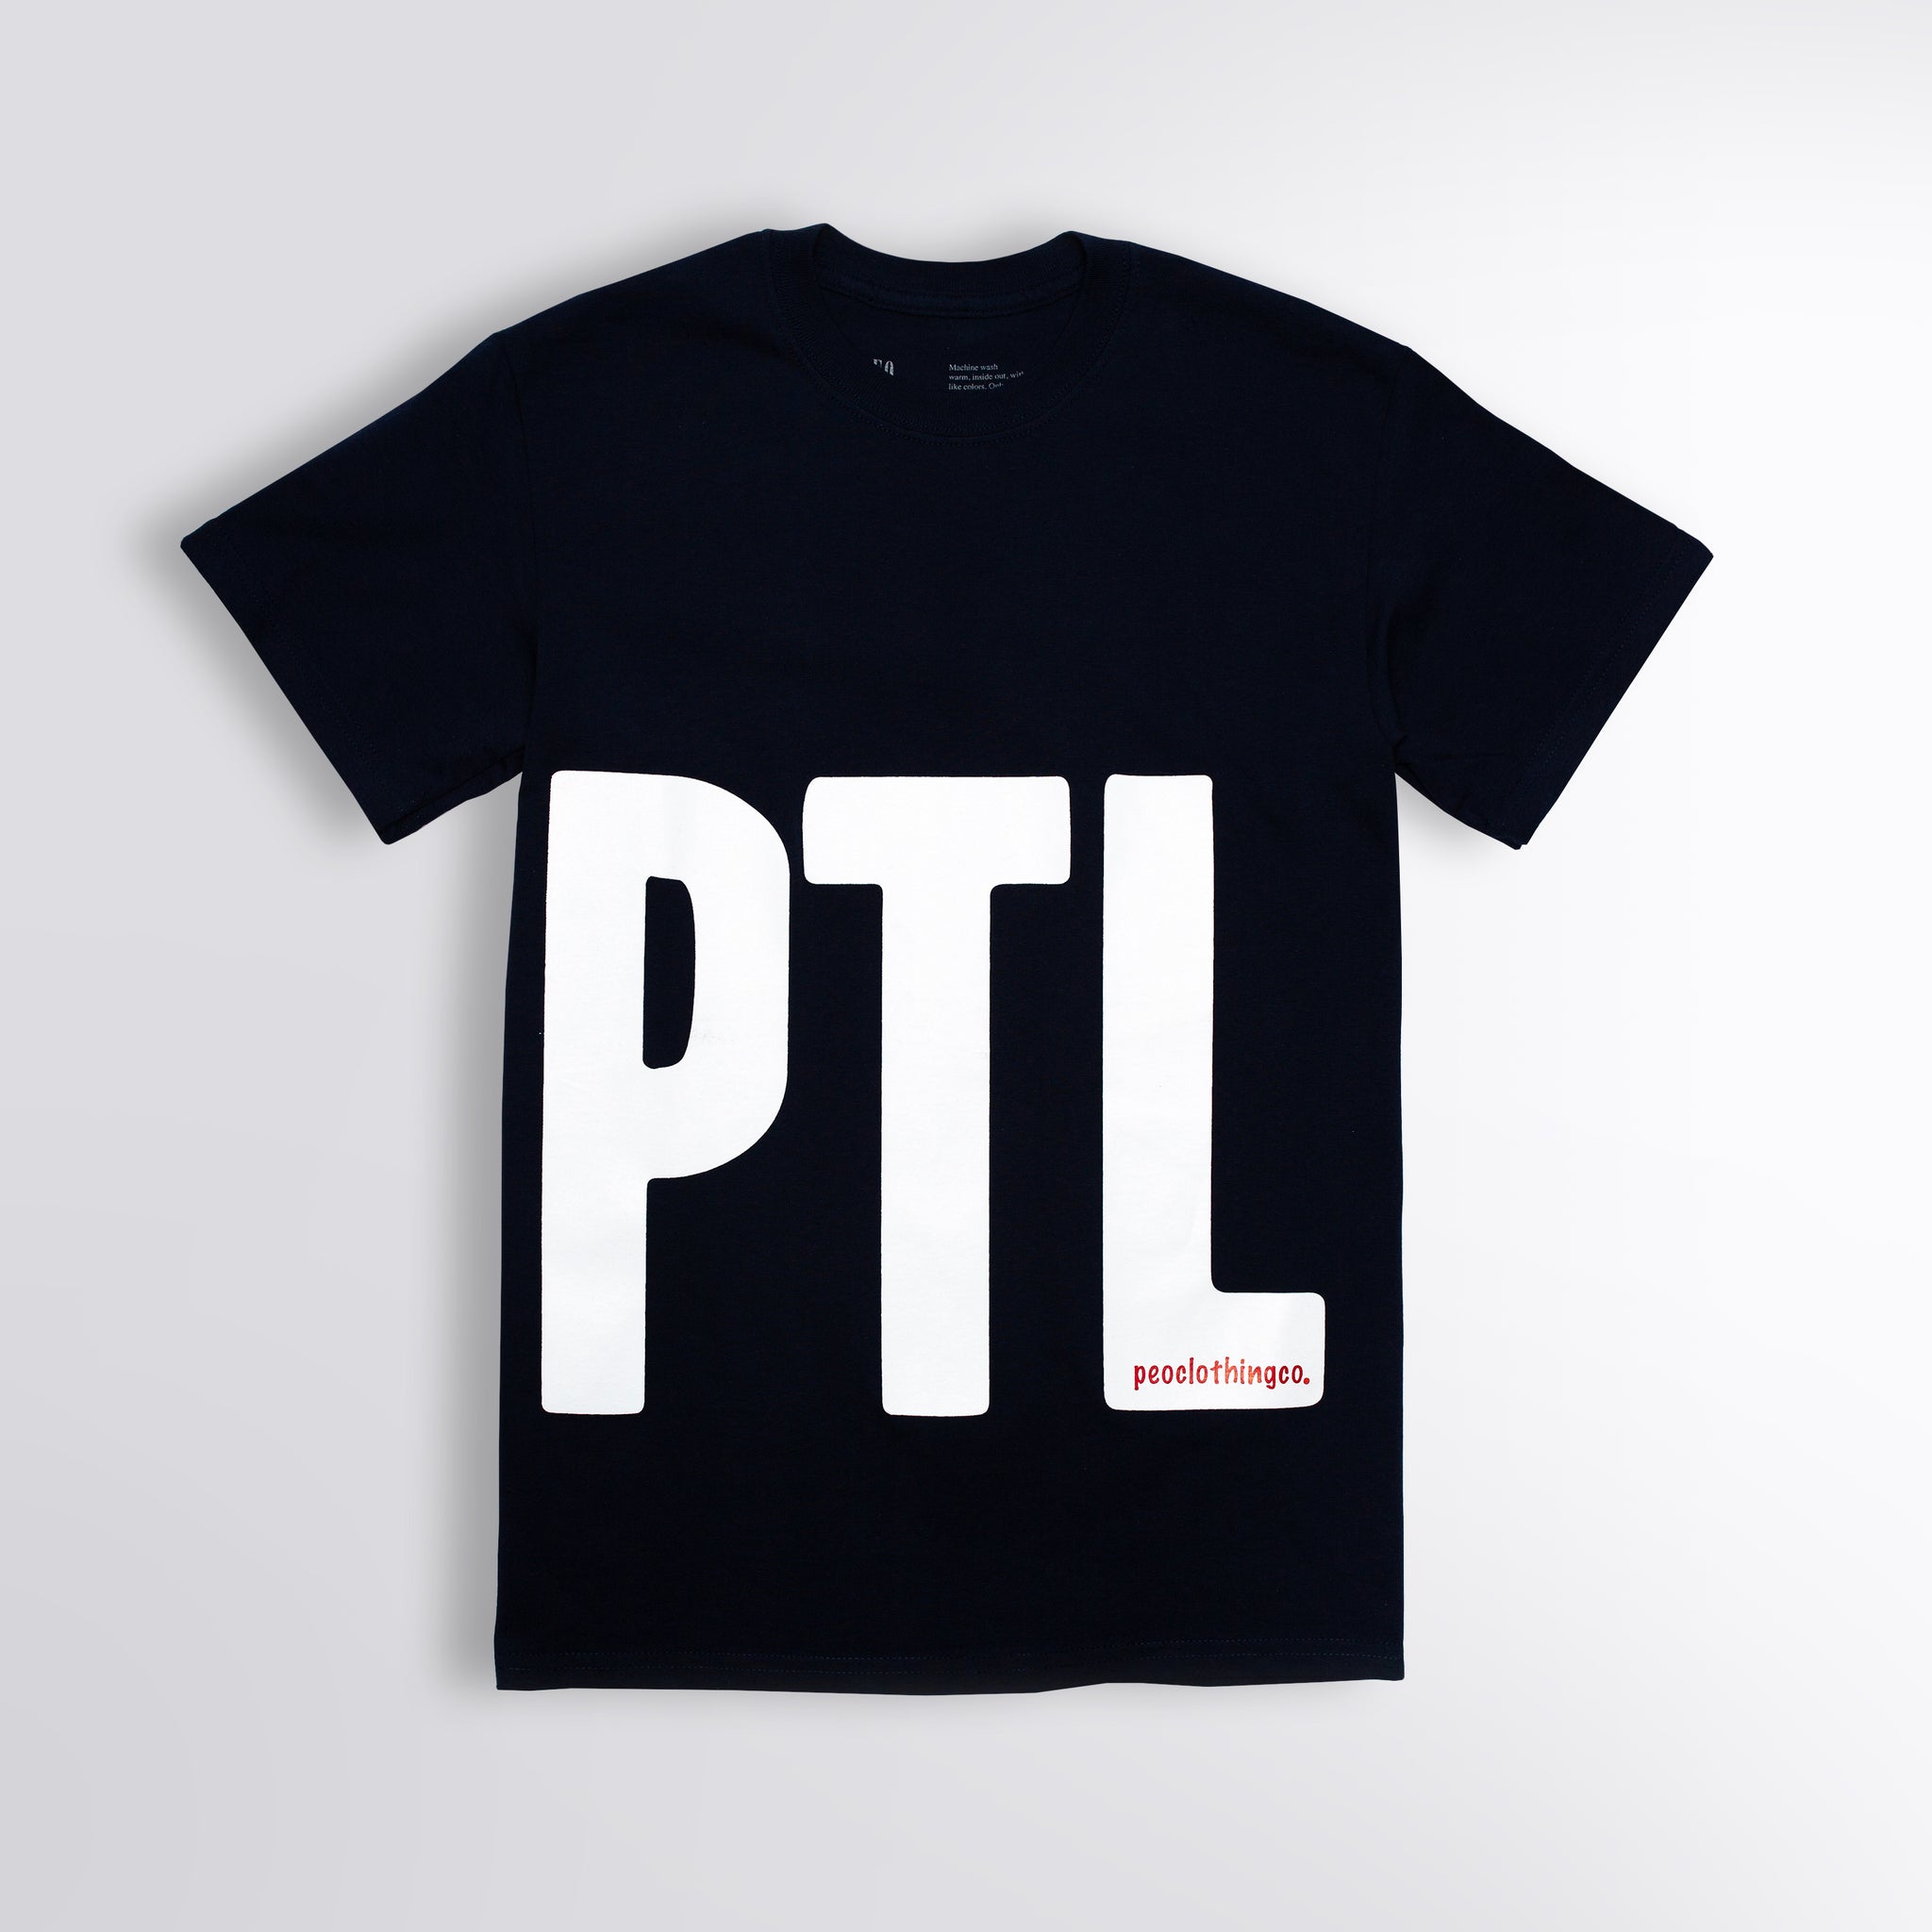 PTL – People Of Faith Clothing Company